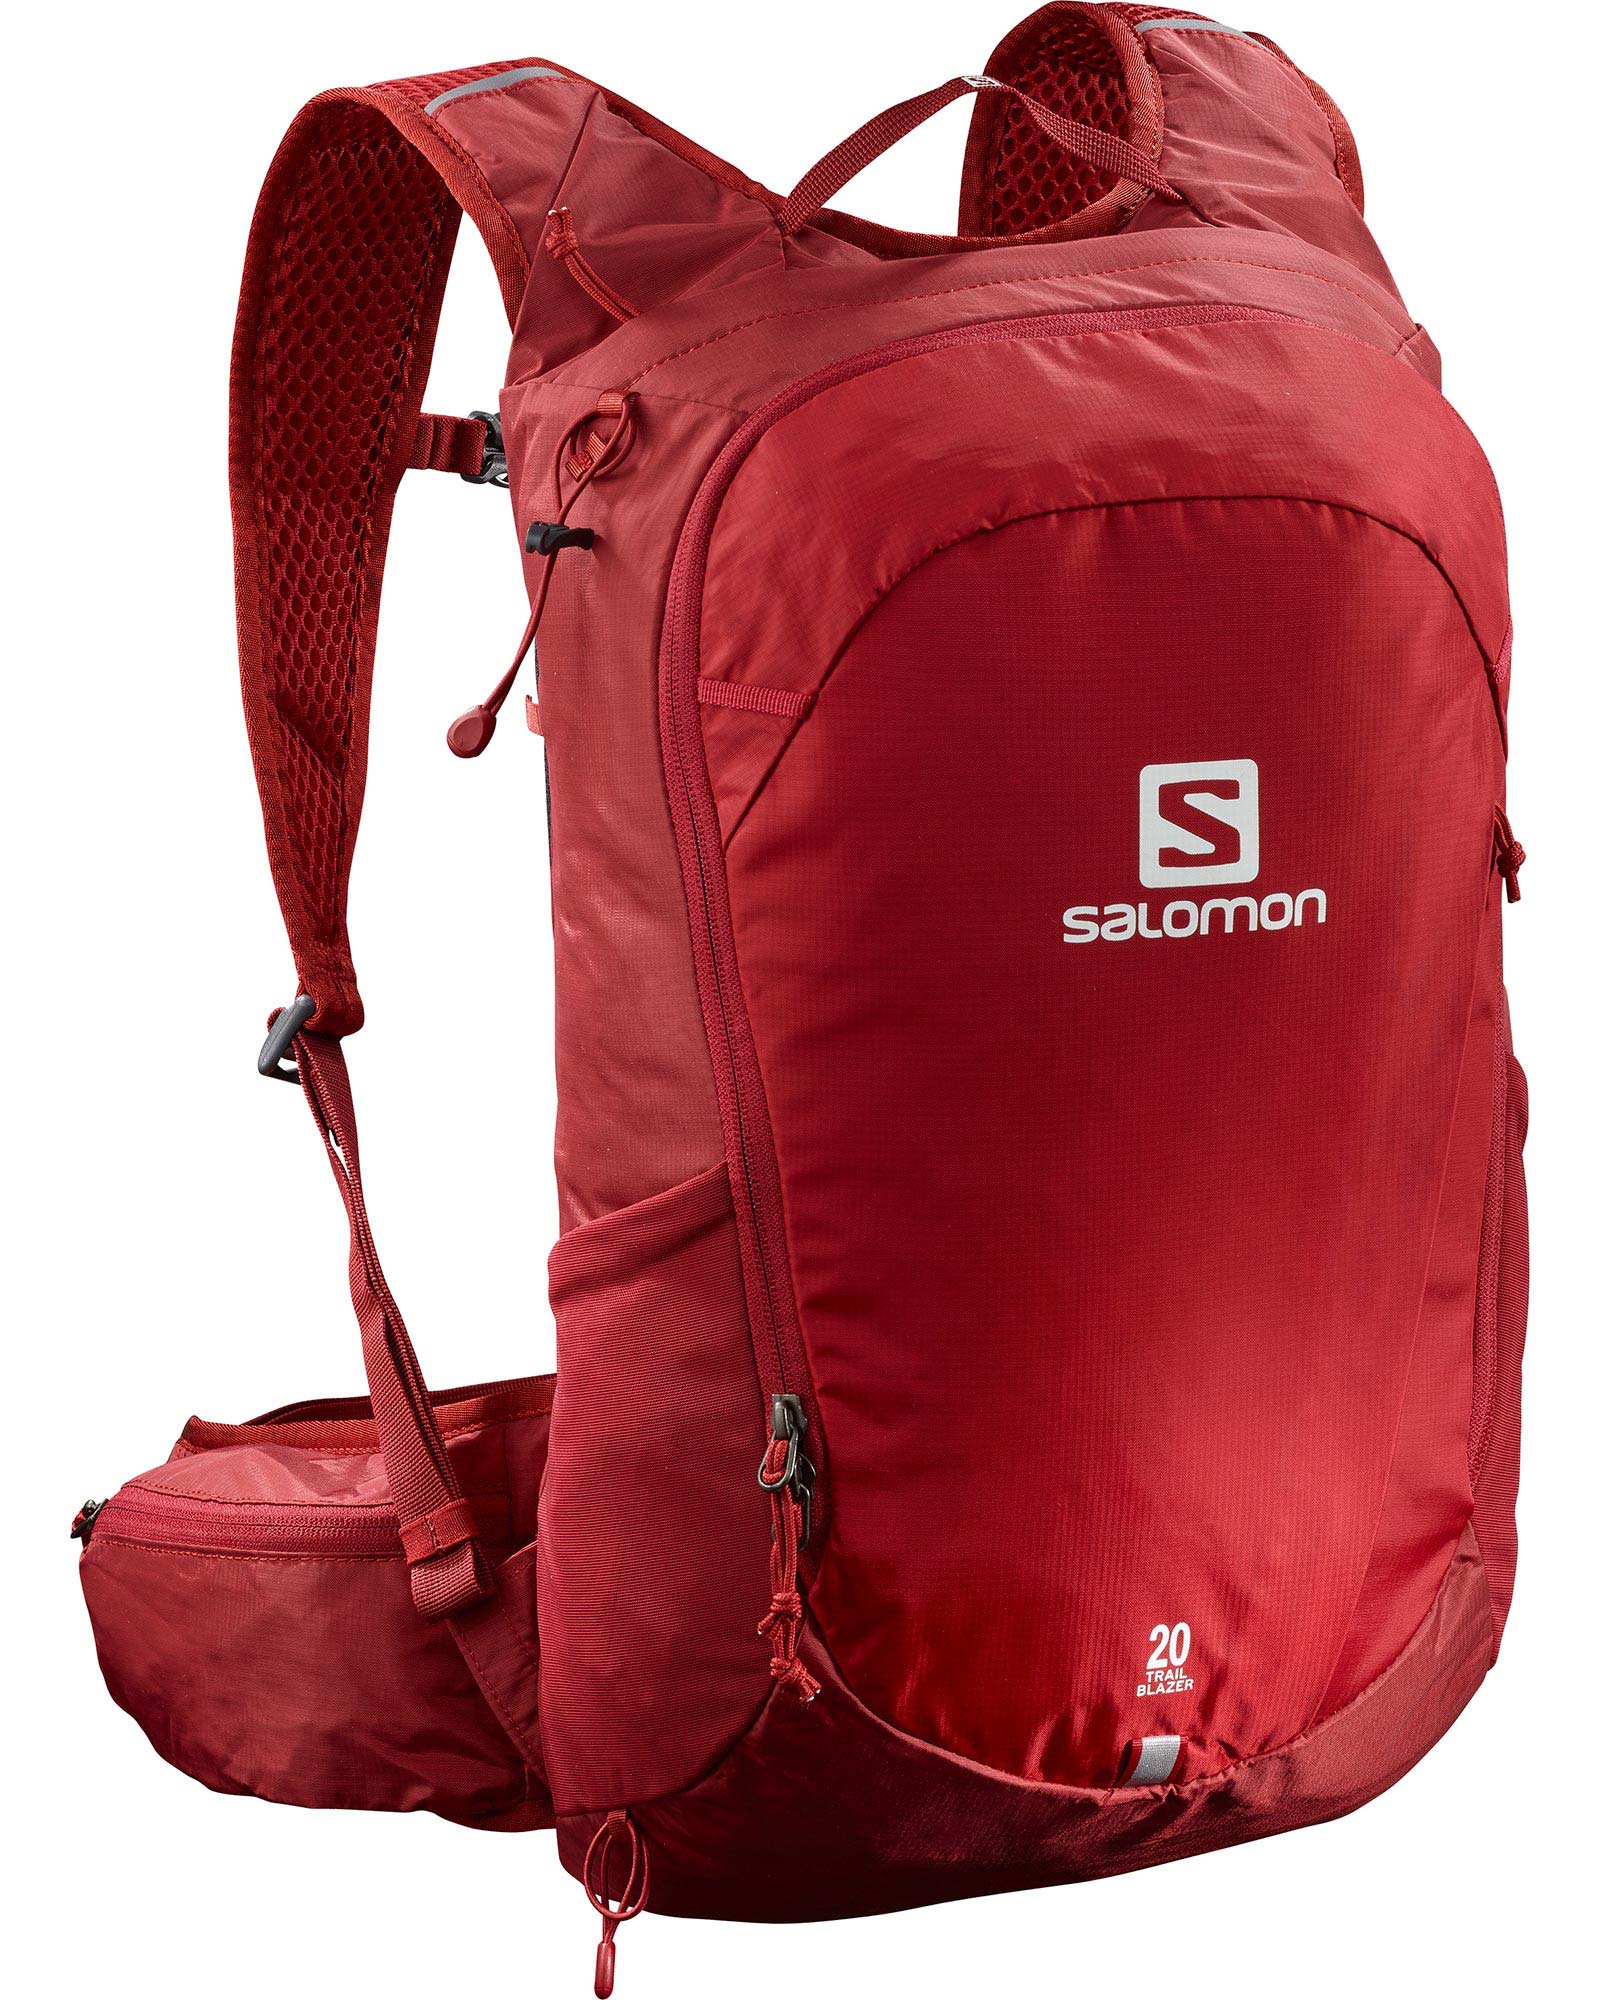 Salomon Trailblazer 20 Pack - Red Dahlia/Ebony